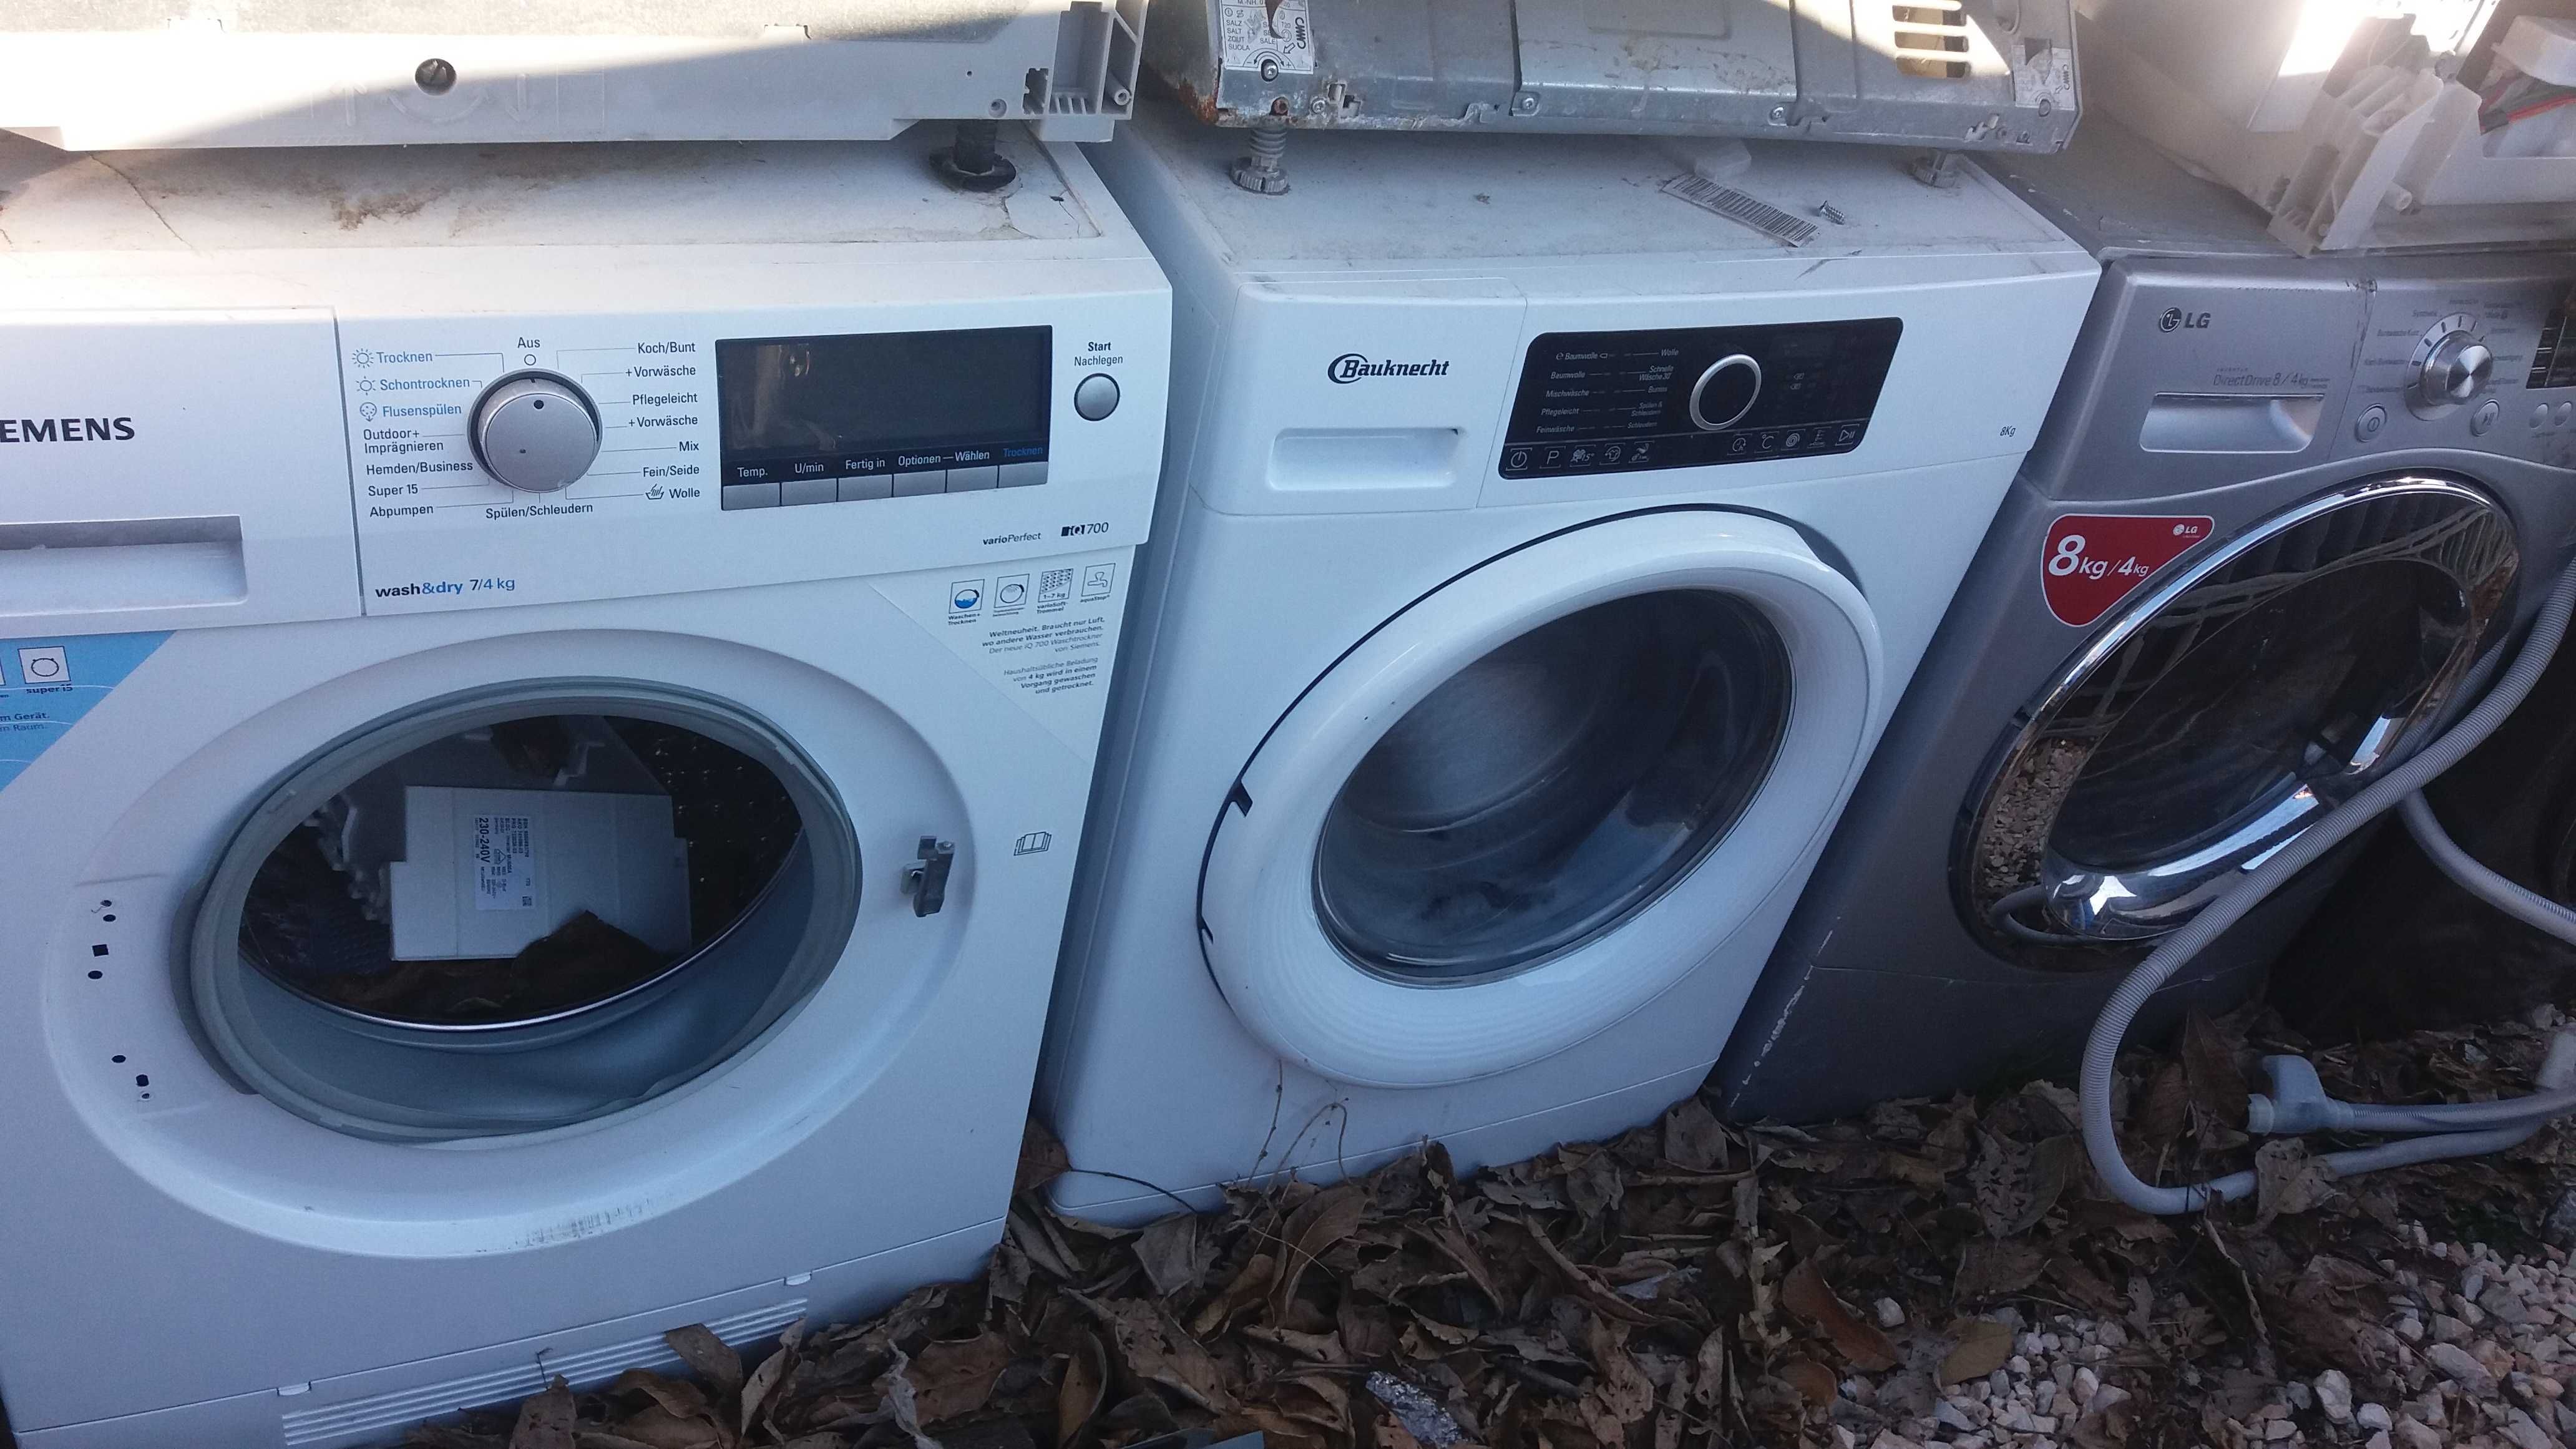 перални машини на части ремонт и продажби